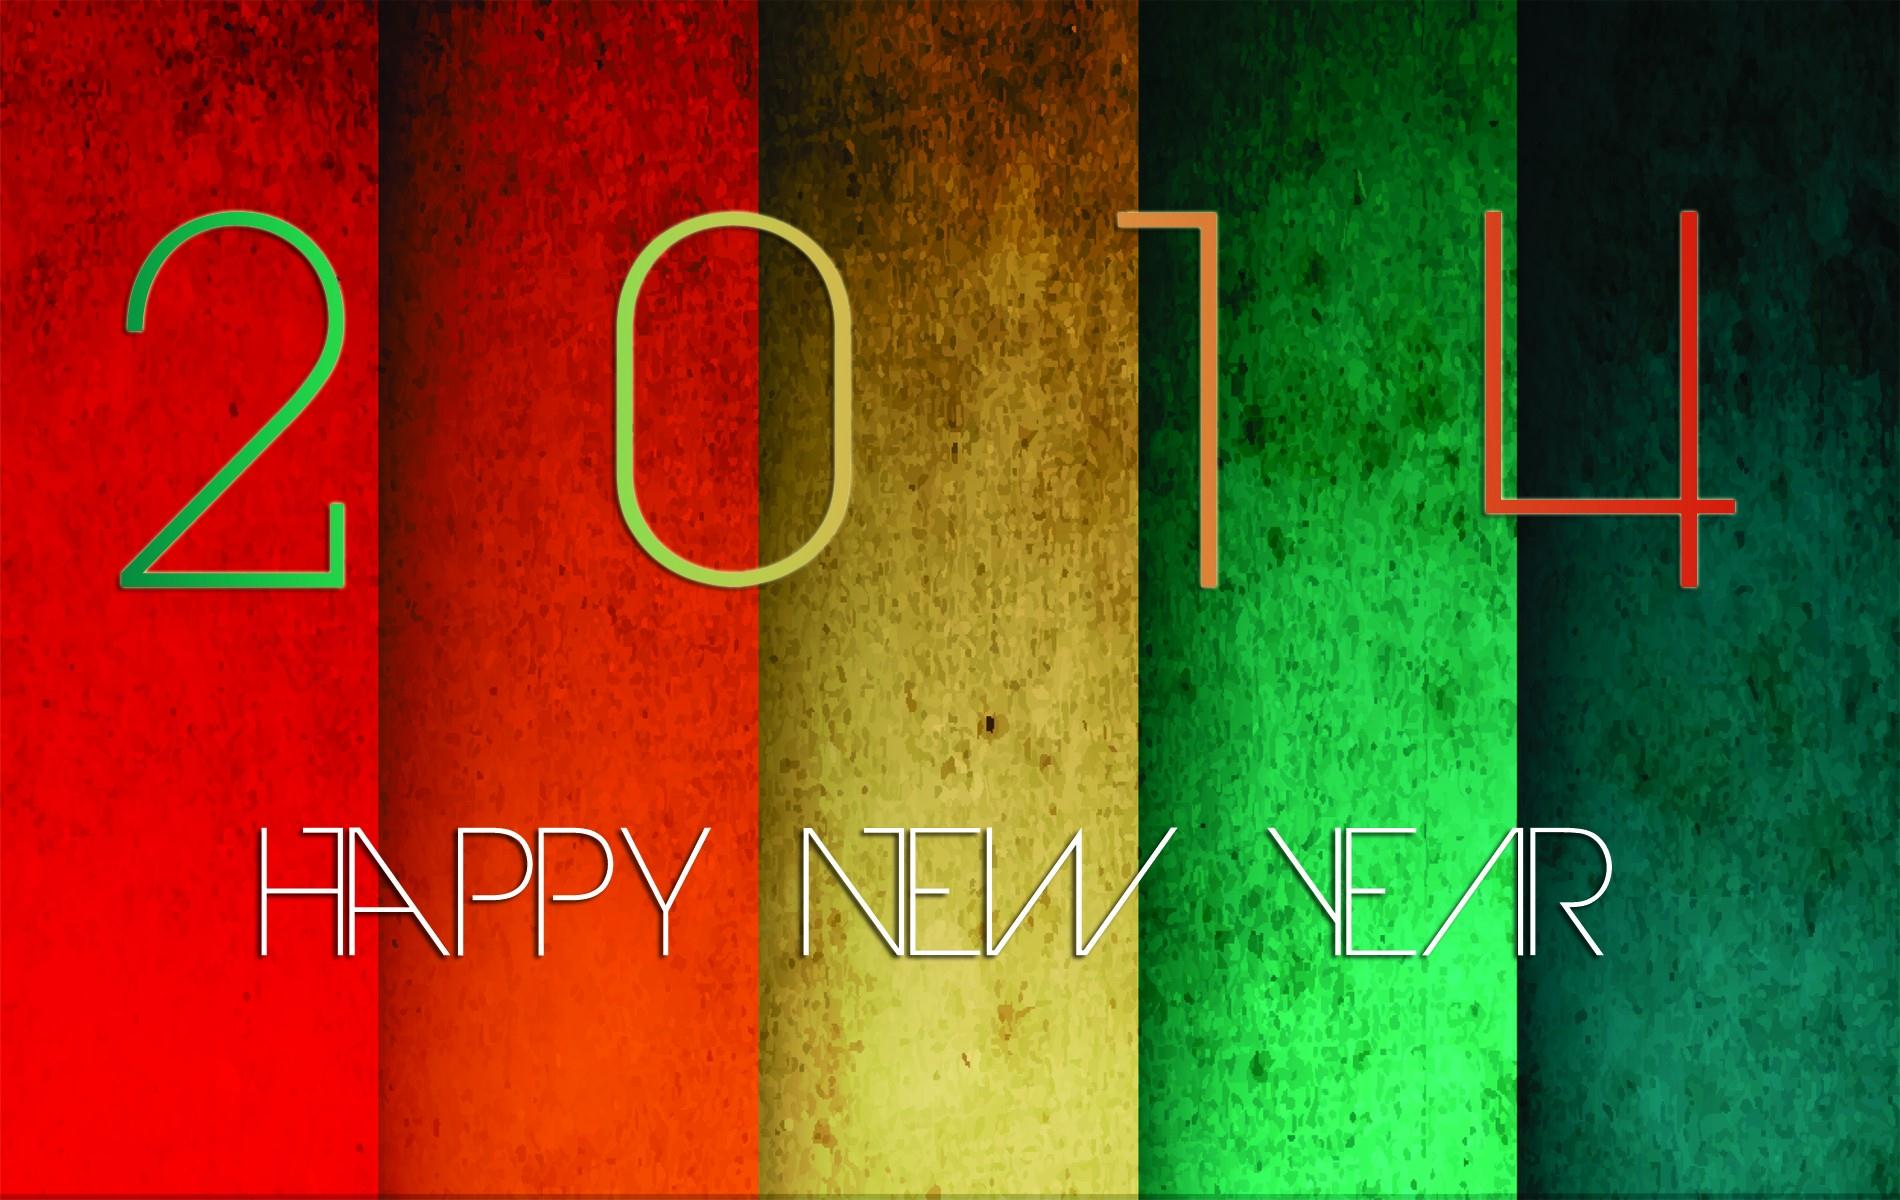 Happy New Year 2014 Wallpaper Free Download Hd - HD Wallpaper 